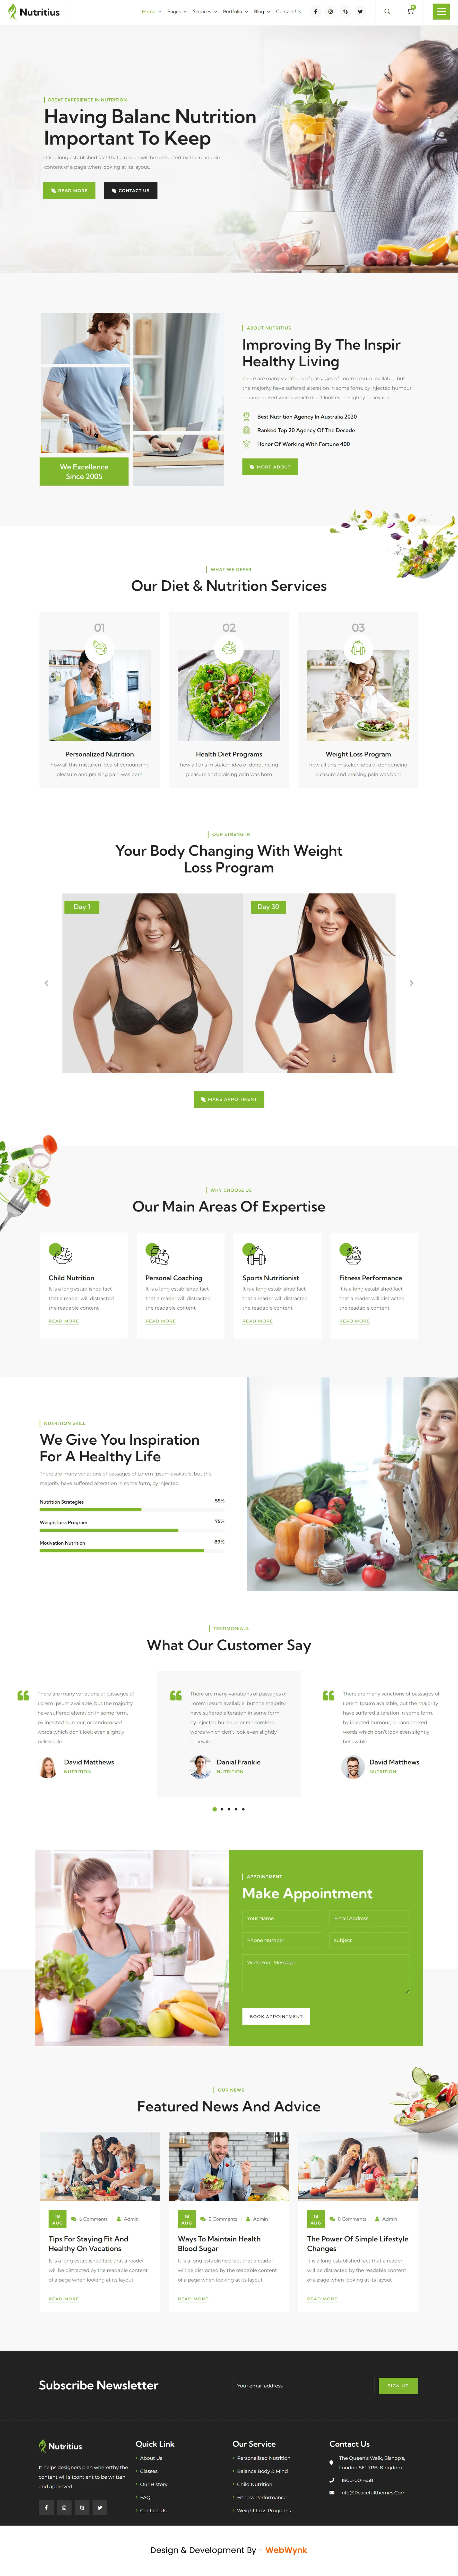 nutrition-fitness-website-design-webwynk